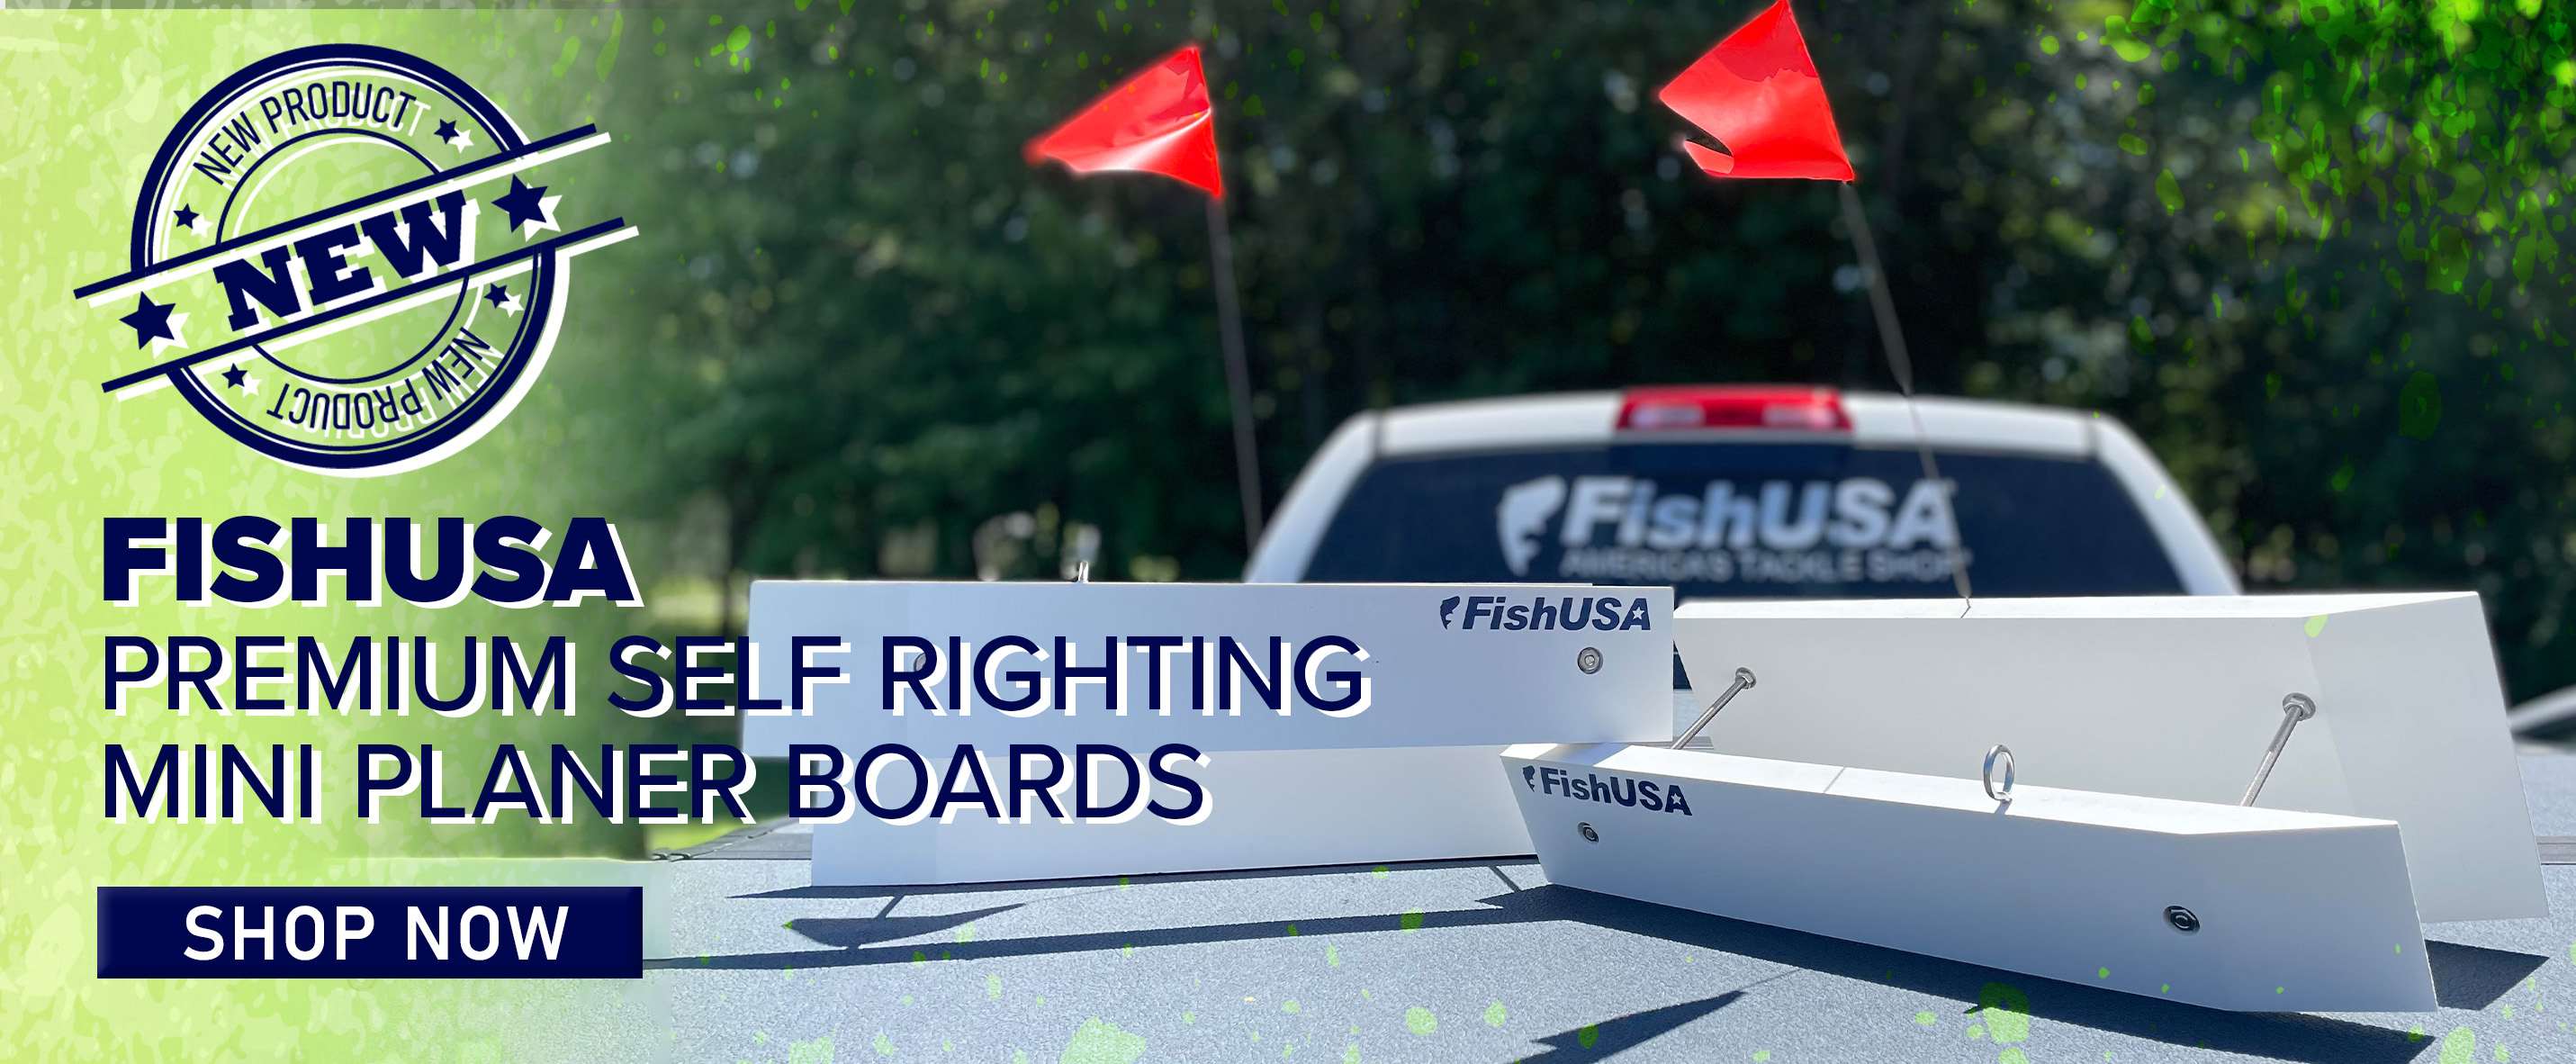 New FishUSA Premium Self Righting Mini Planer Boards  Shop Now  FishuSA fFishUSA ELF RIGHTING # SHOP N 